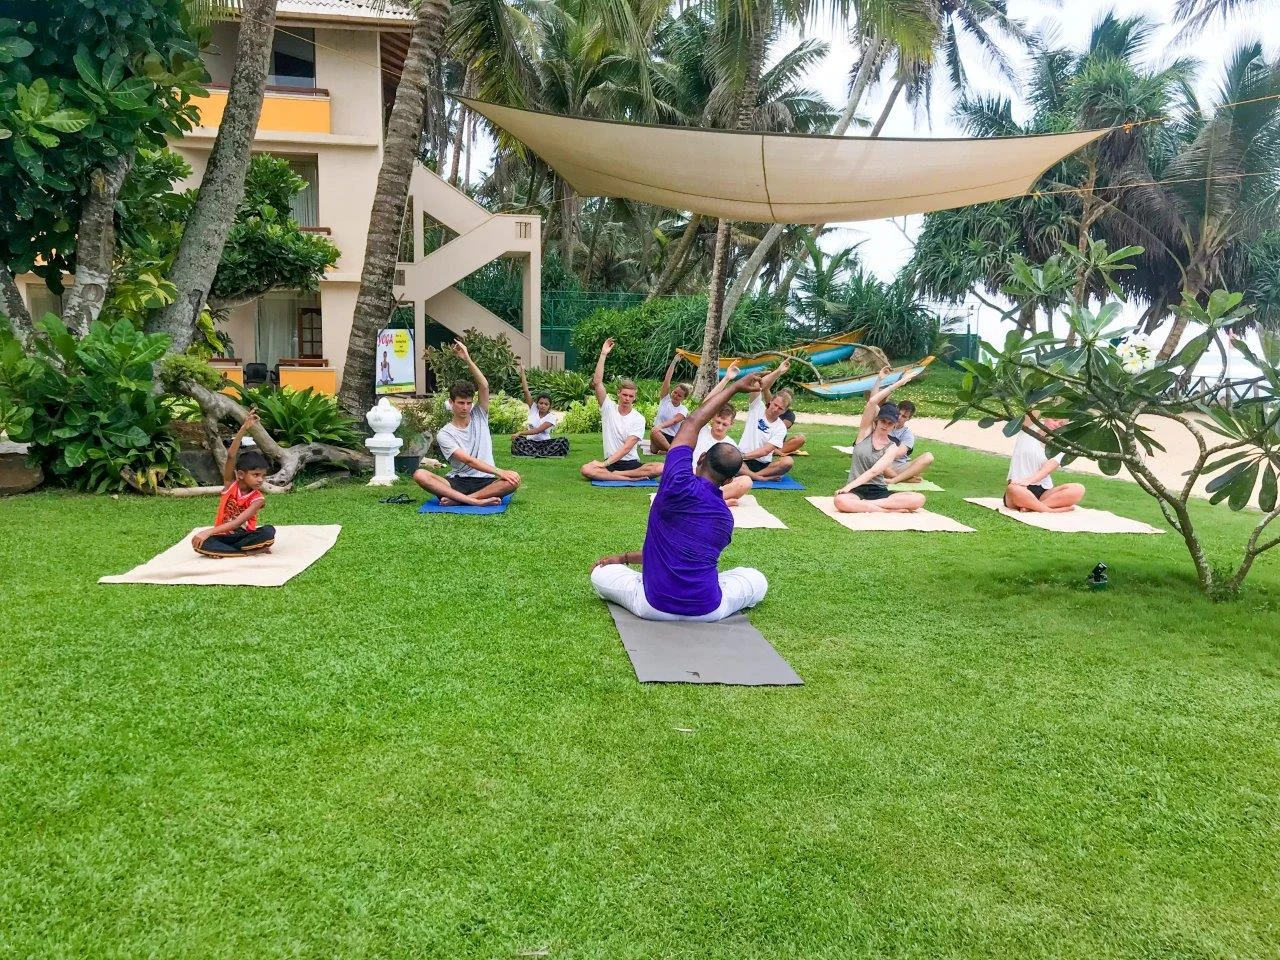 yogis practicing poses in insight resort ahangama